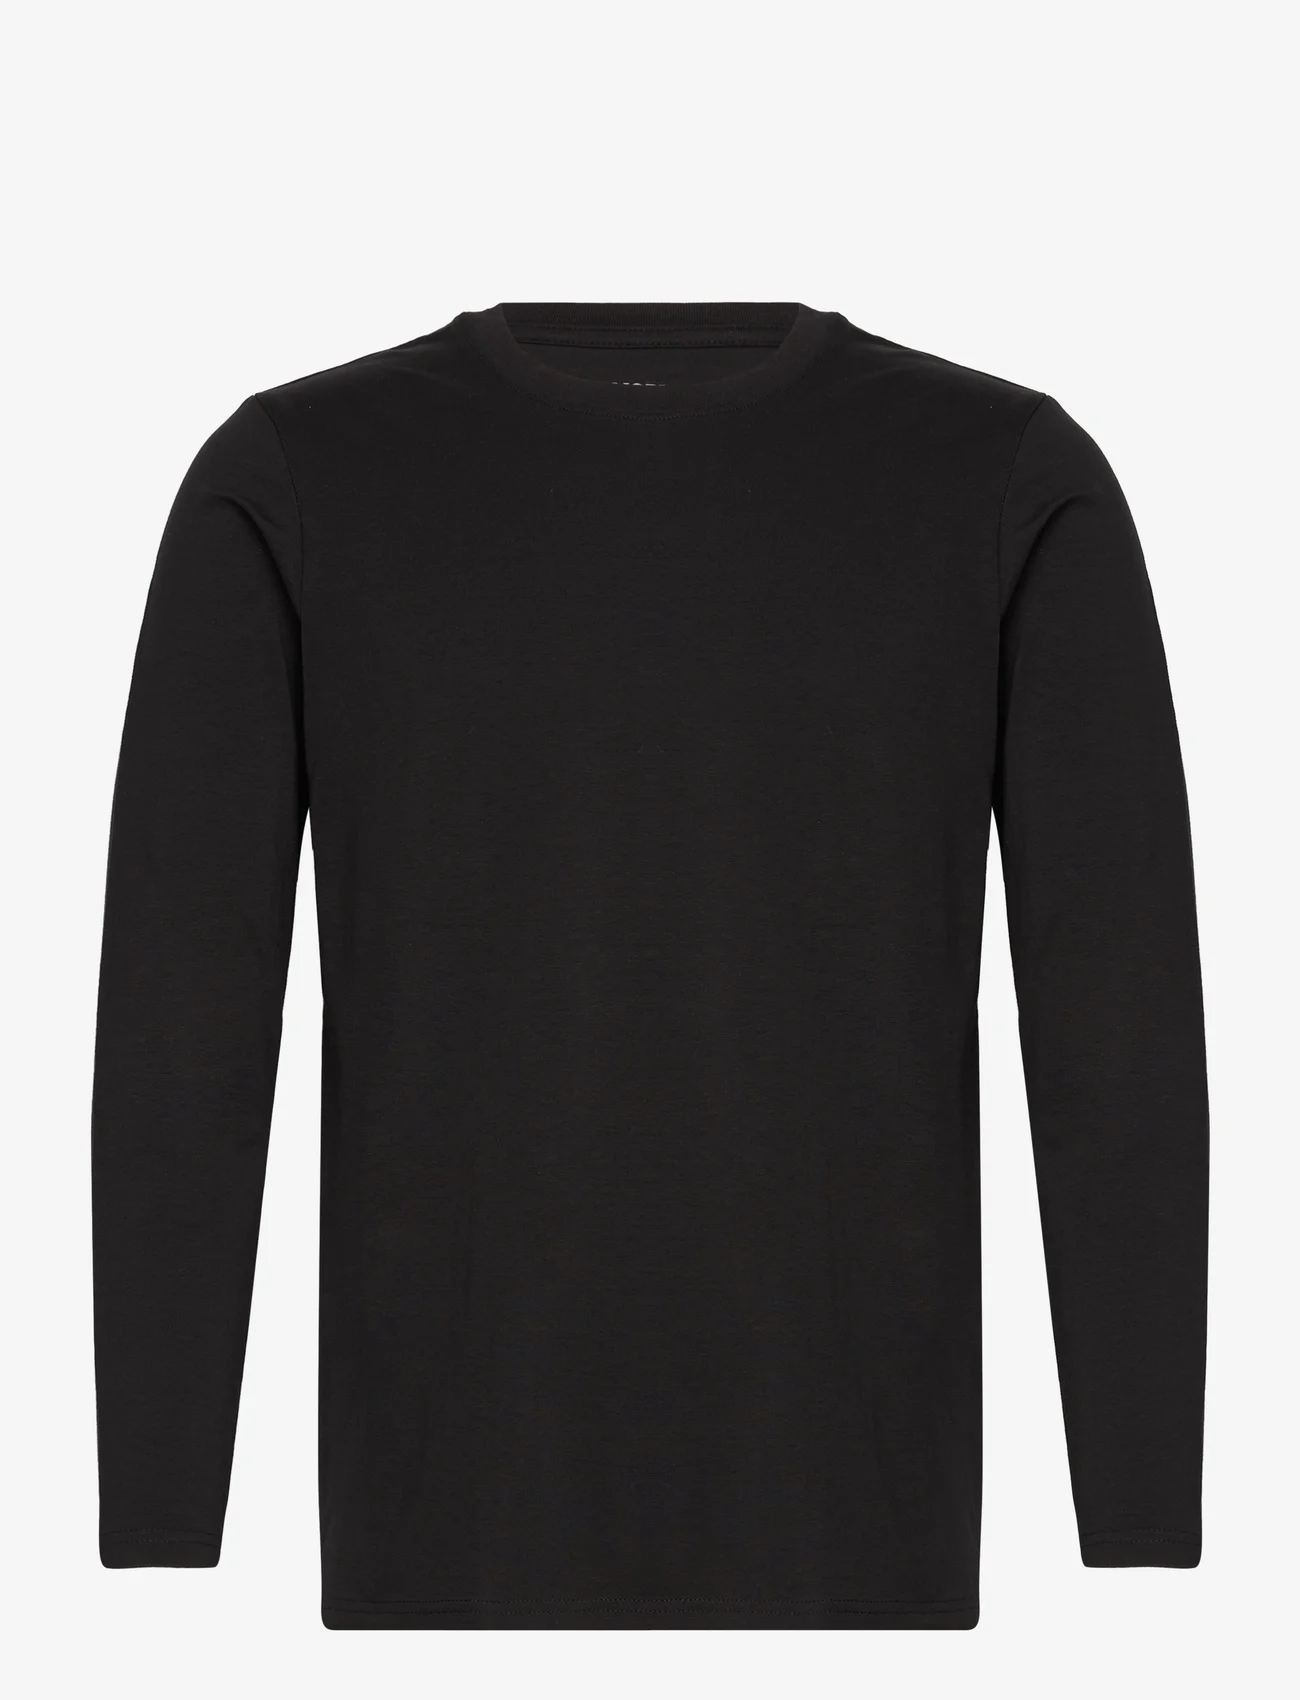 NORVIG - Men's O-neck L/S T-shirt, Cotton/Stretch - mažiausios kainos - black - 0